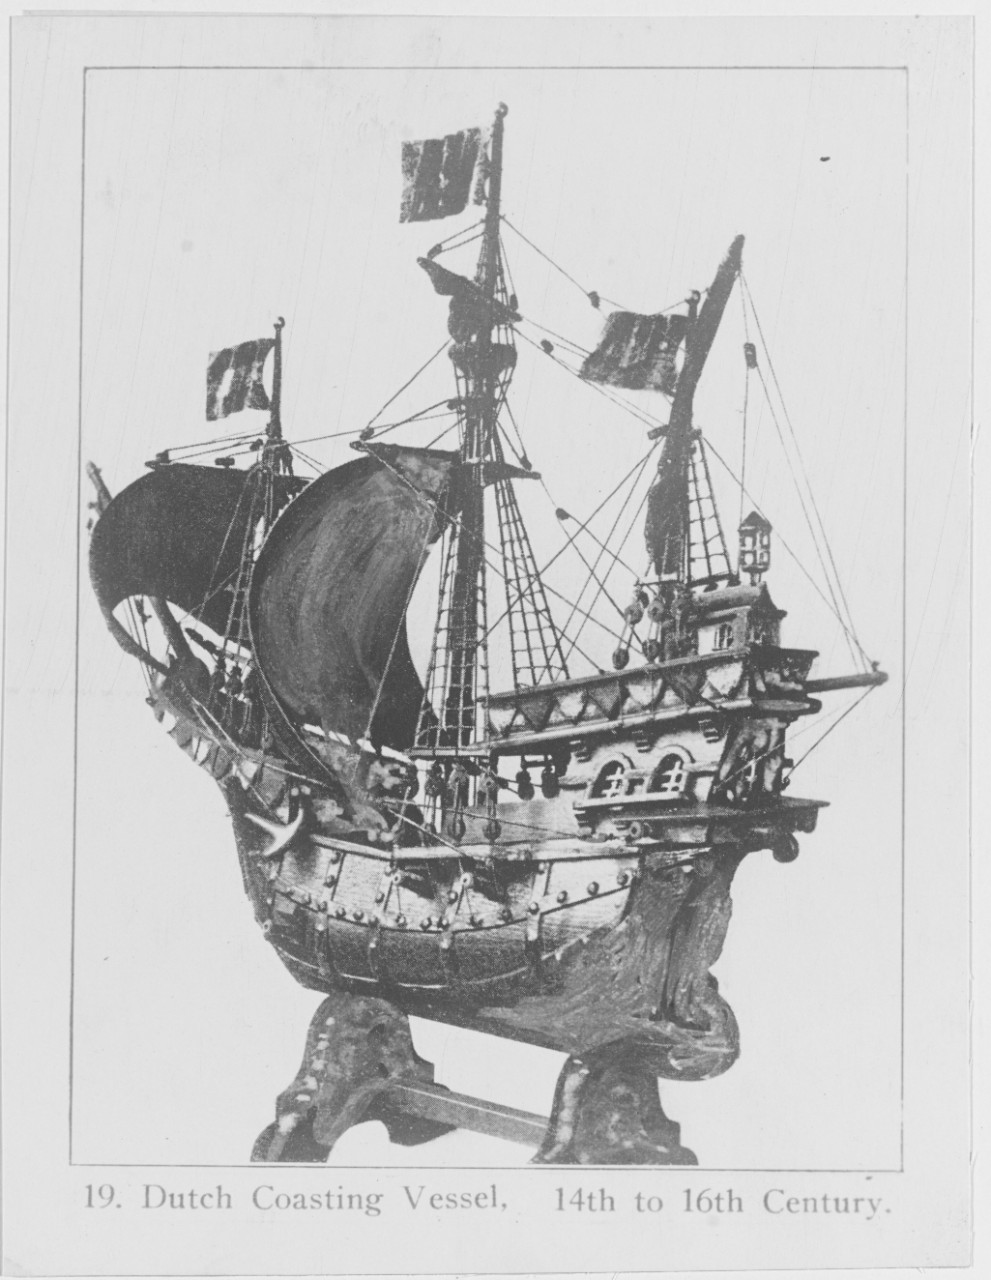 Model of a Dutch Coasting Vessel, 14th to 16th Century